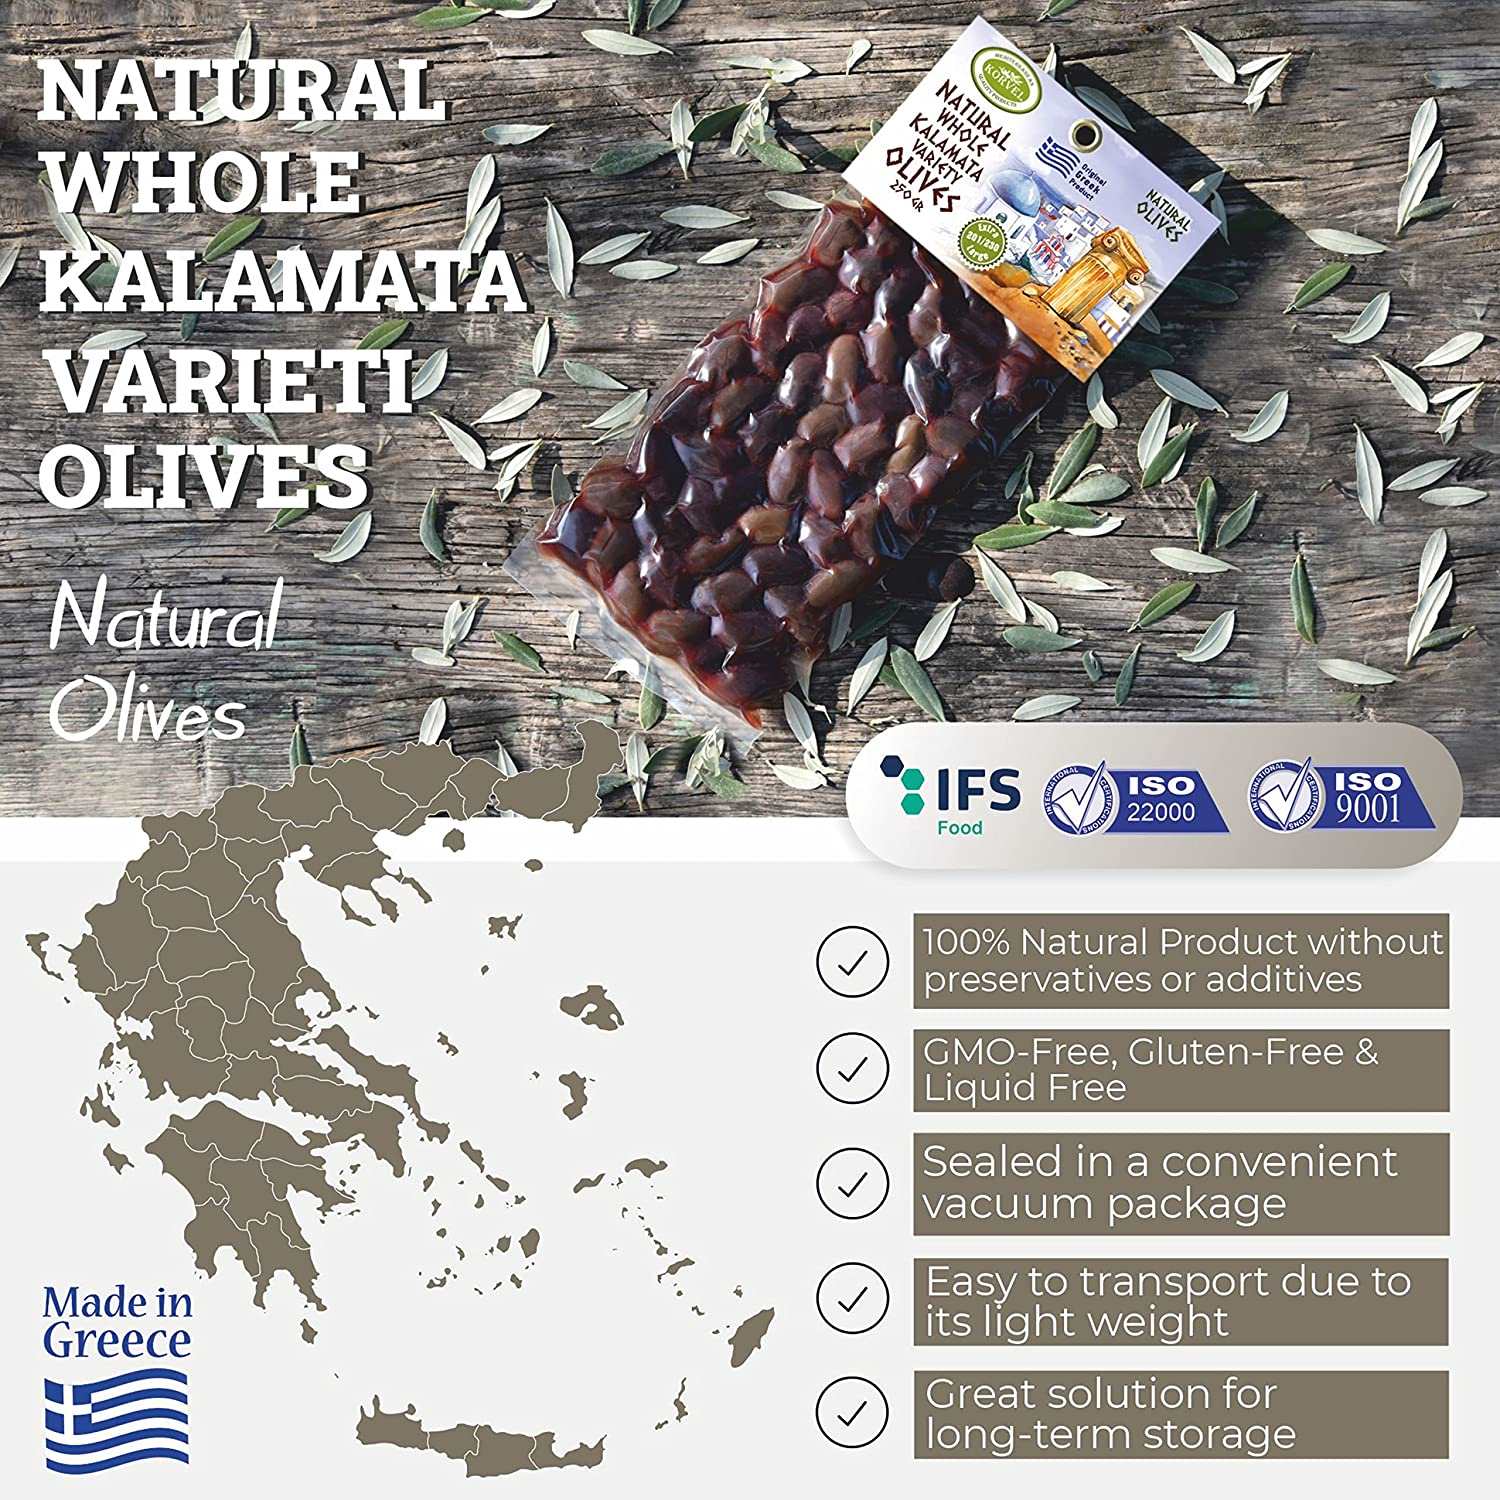 KORVEL Greek Olives Varieties of Kalamata - set of two packs 2 x 0.55 lb - 1.1 lb